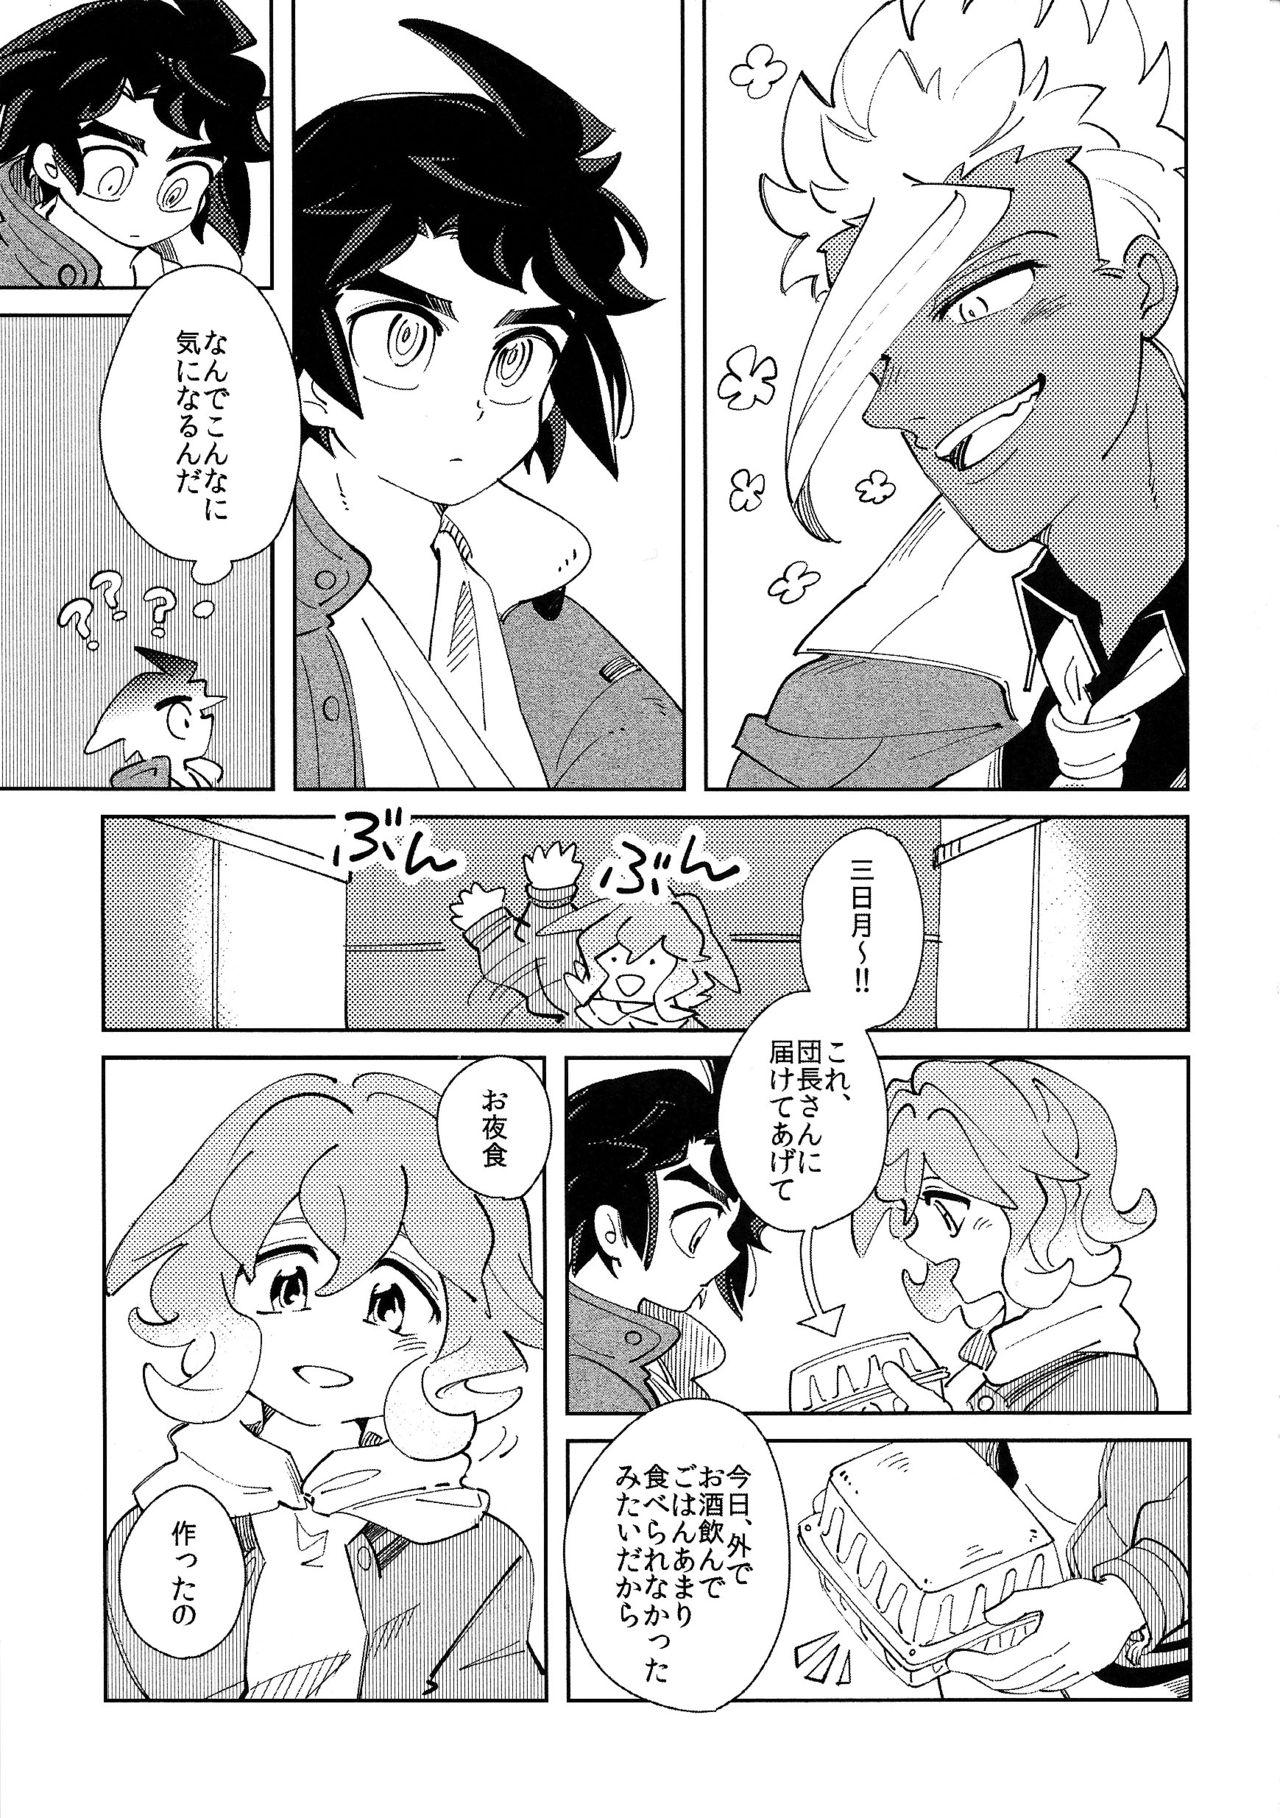 Teamskeet Moufu no Nakami wa? - Mobile suit gundam tekketsu no orphans Doctor - Page 6